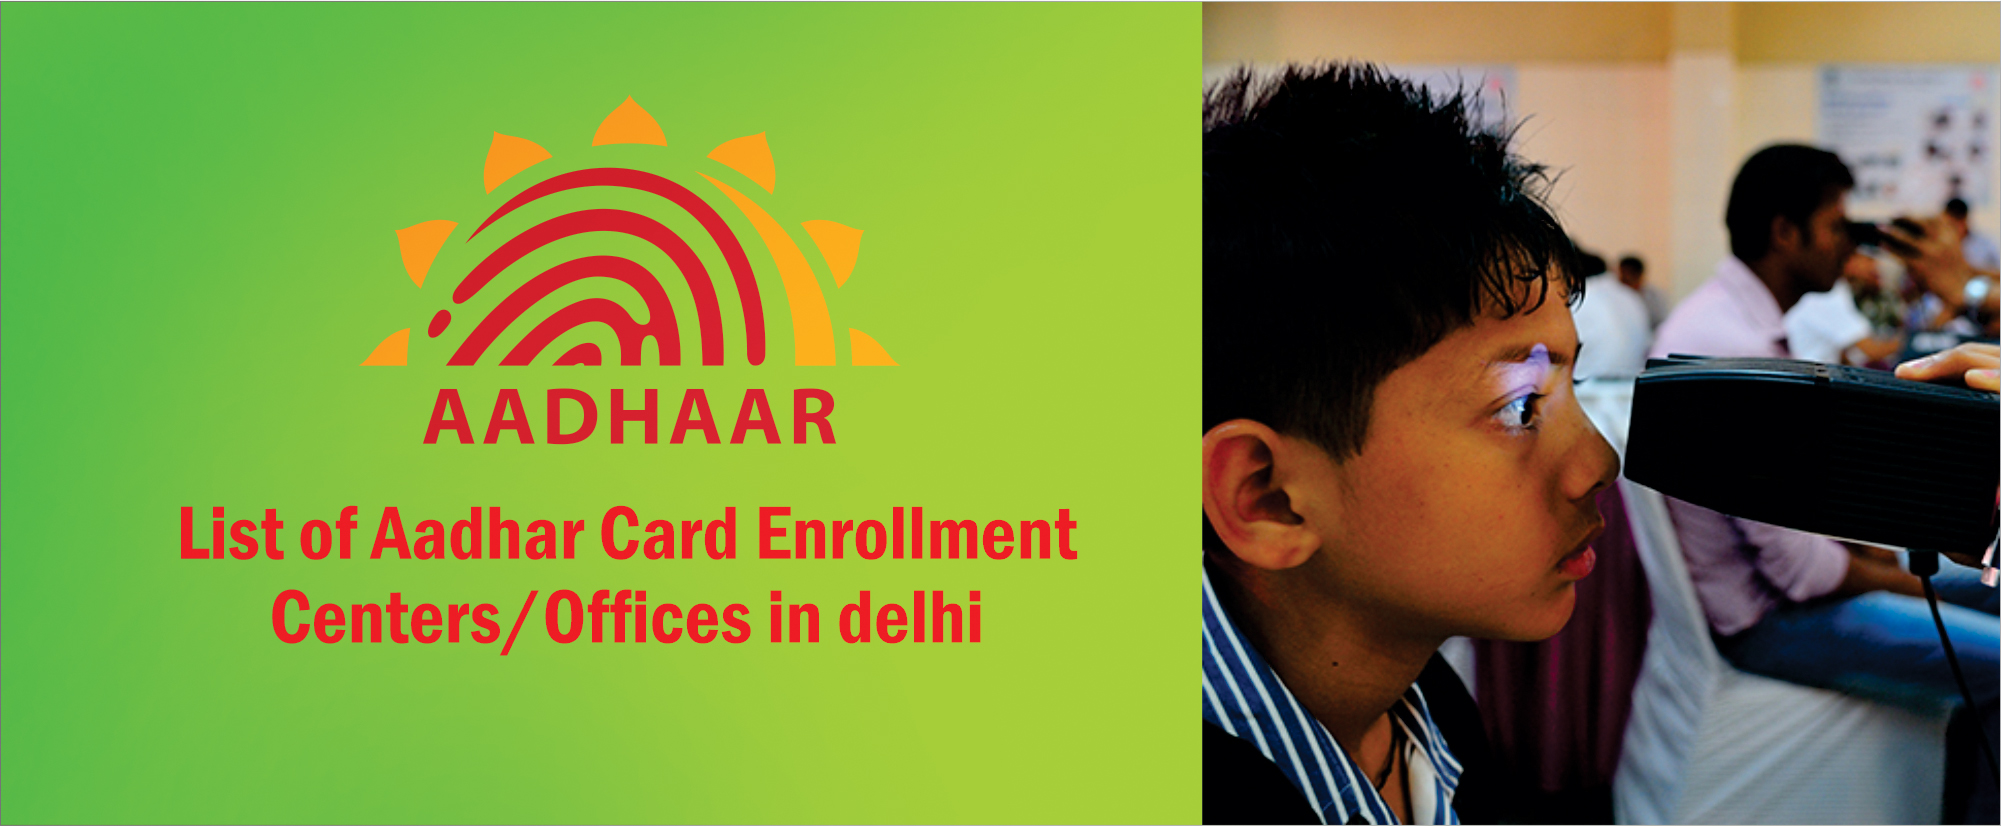 List of Aadhaar Card Enrollment Centers Offices in Delhi